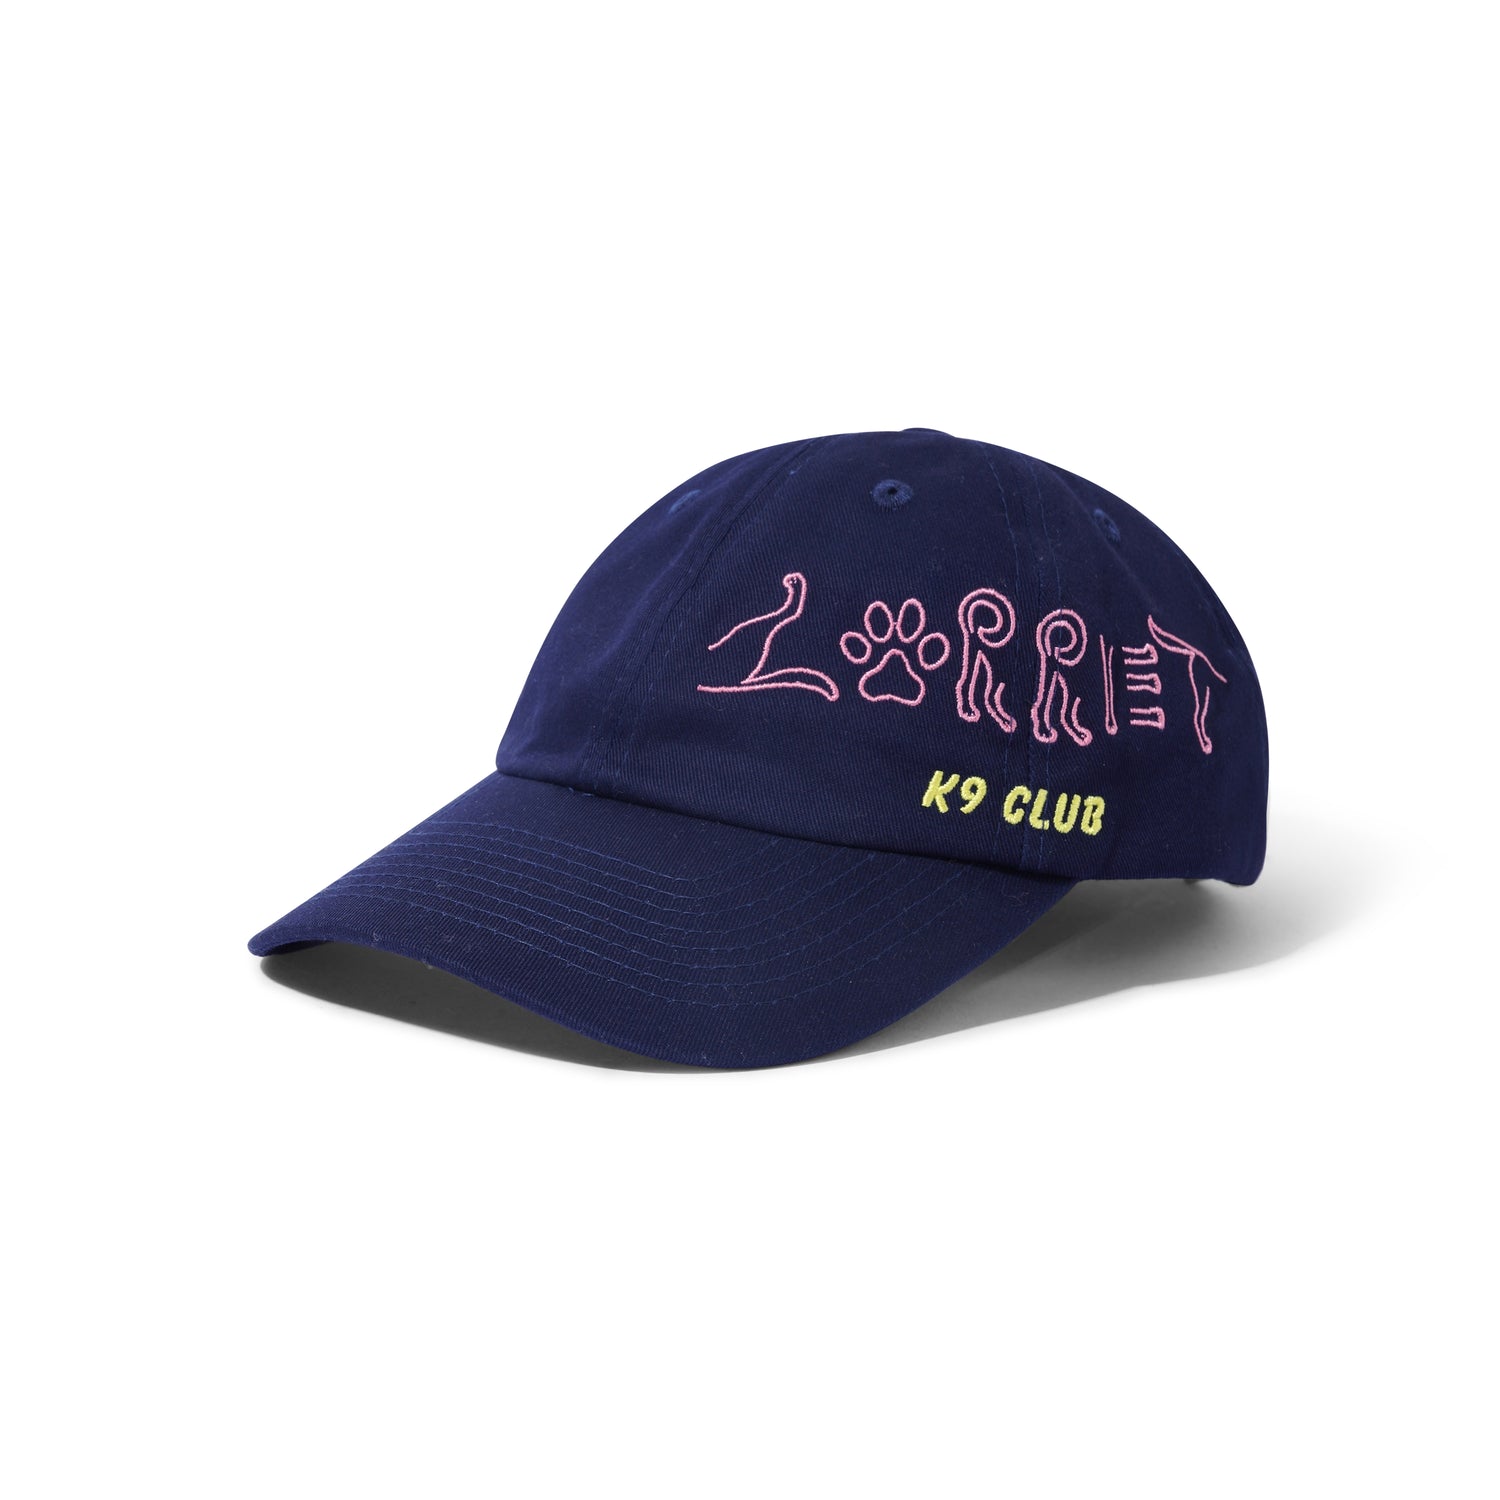 K9 Club Hat, Navy